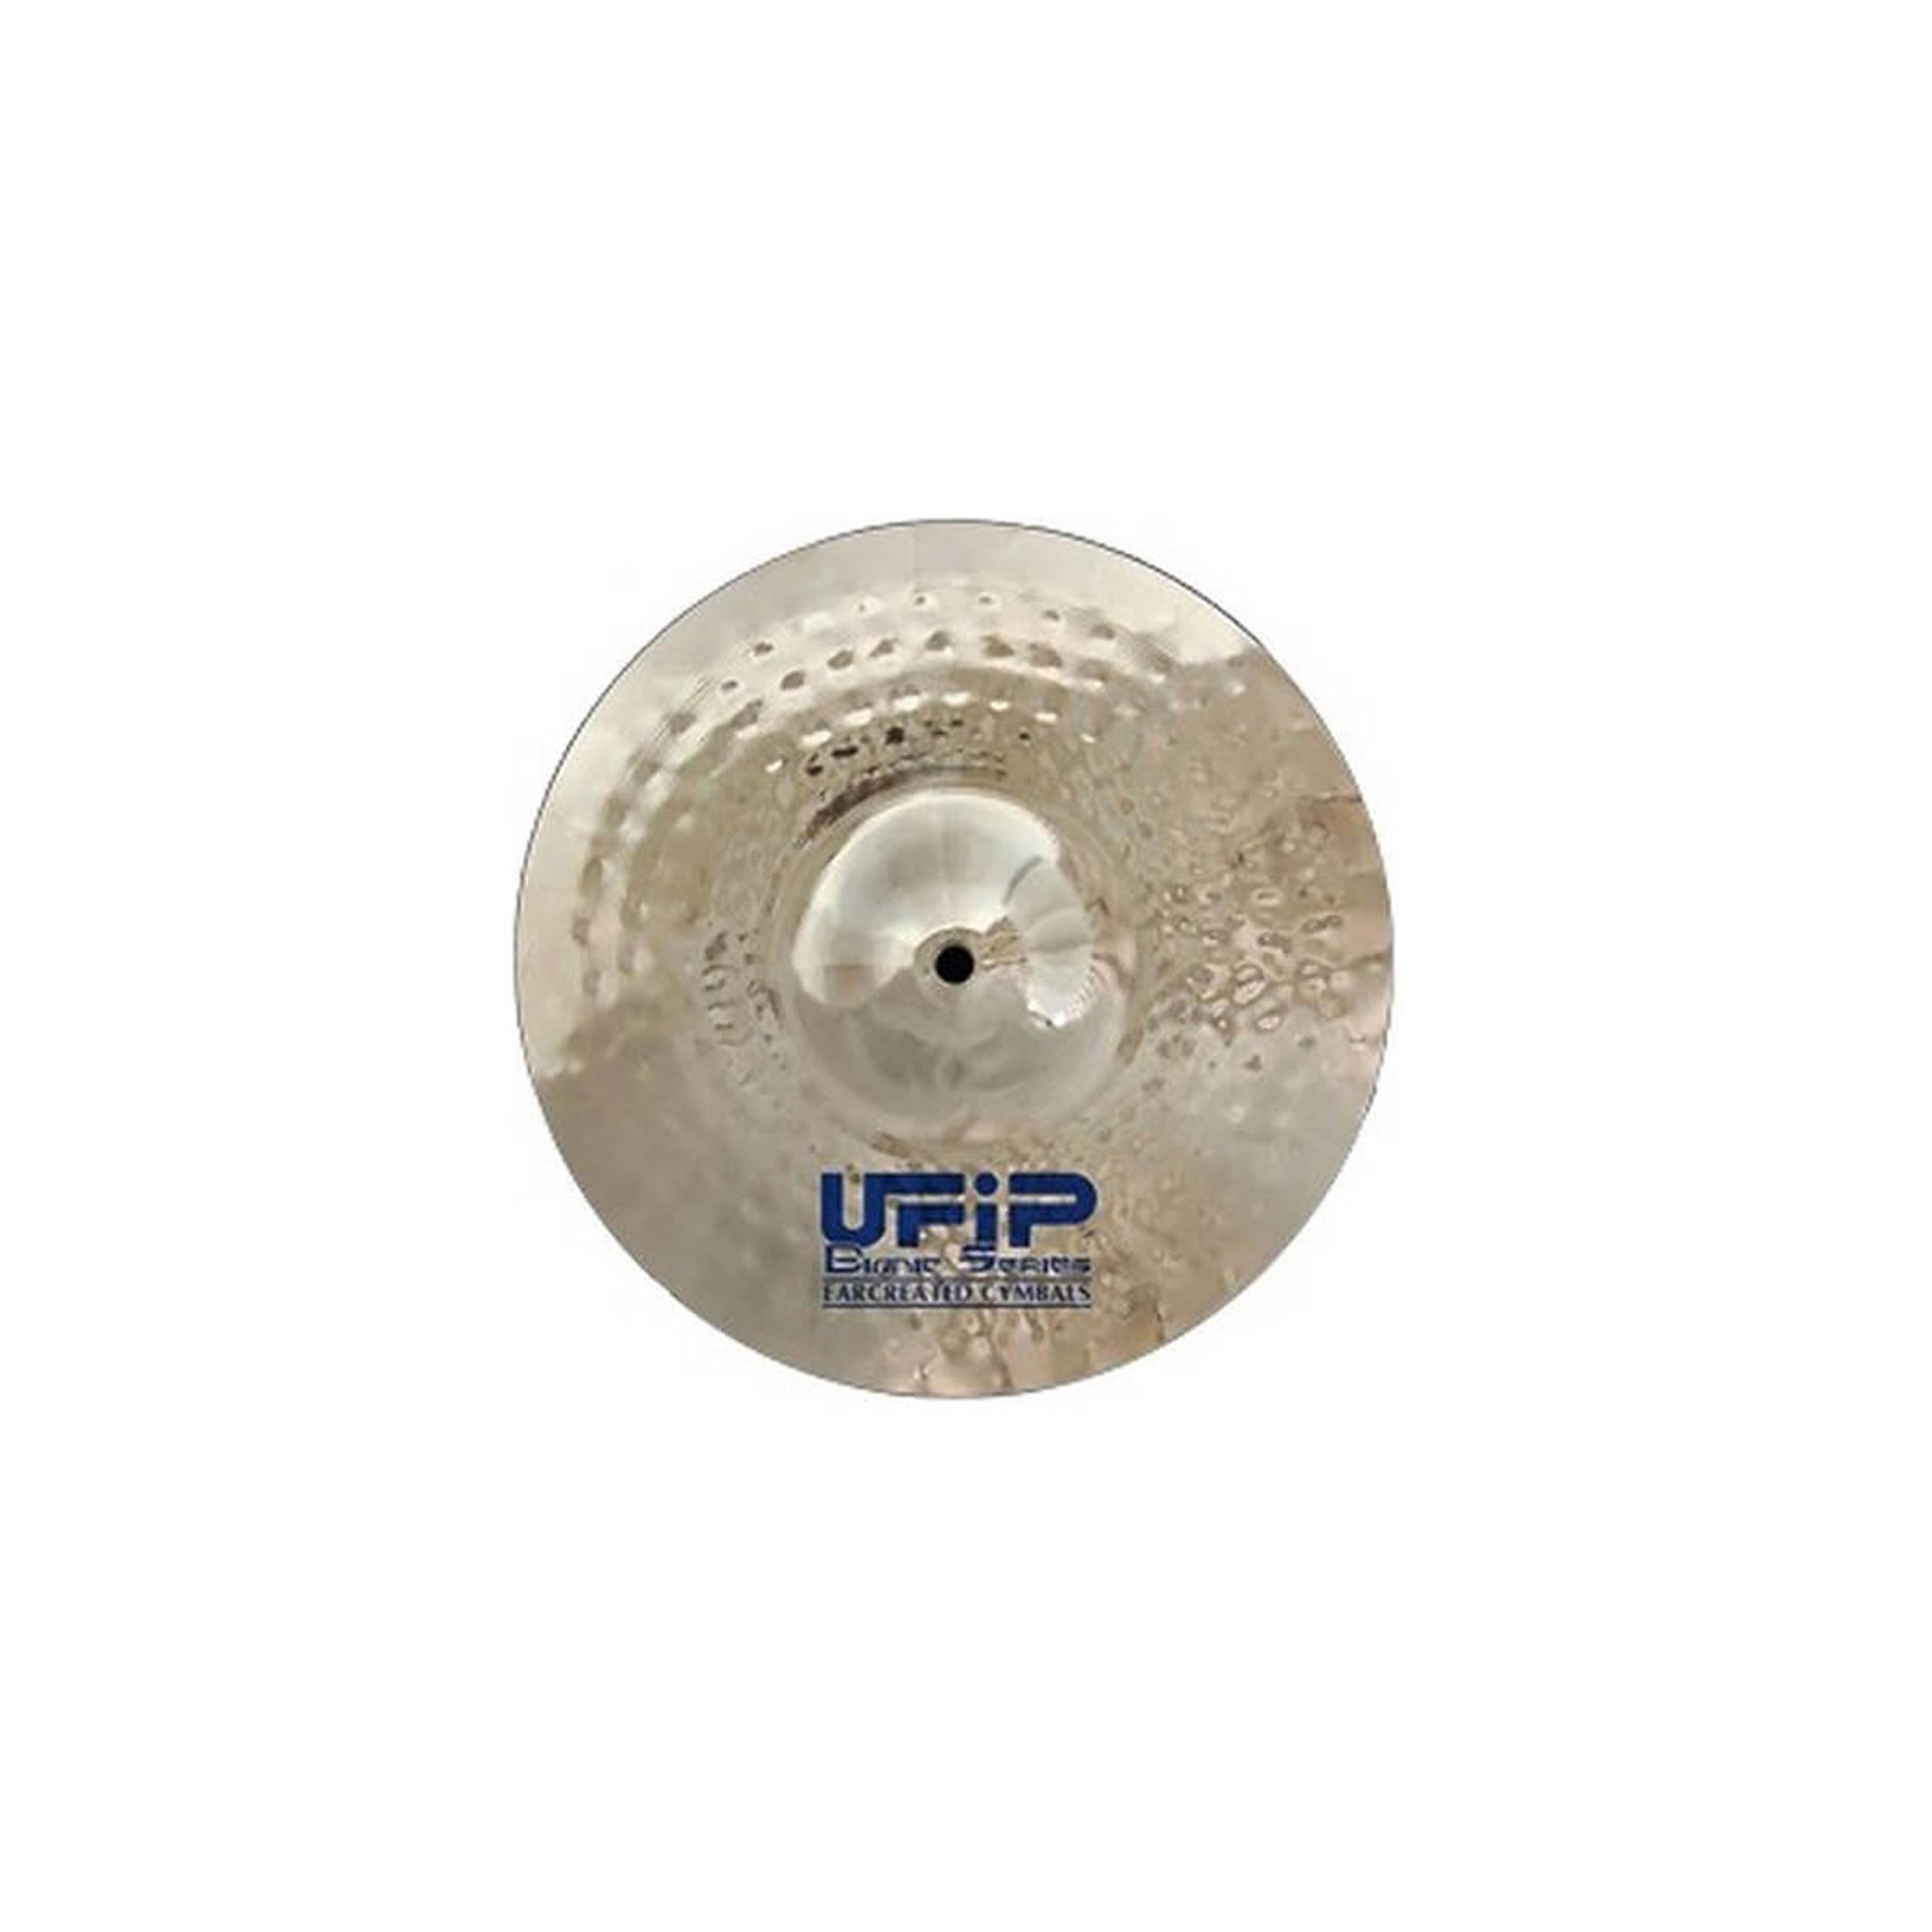 UFIP BIONIC CRASH 15 - Batterie / Percussioni Piatti - Crash